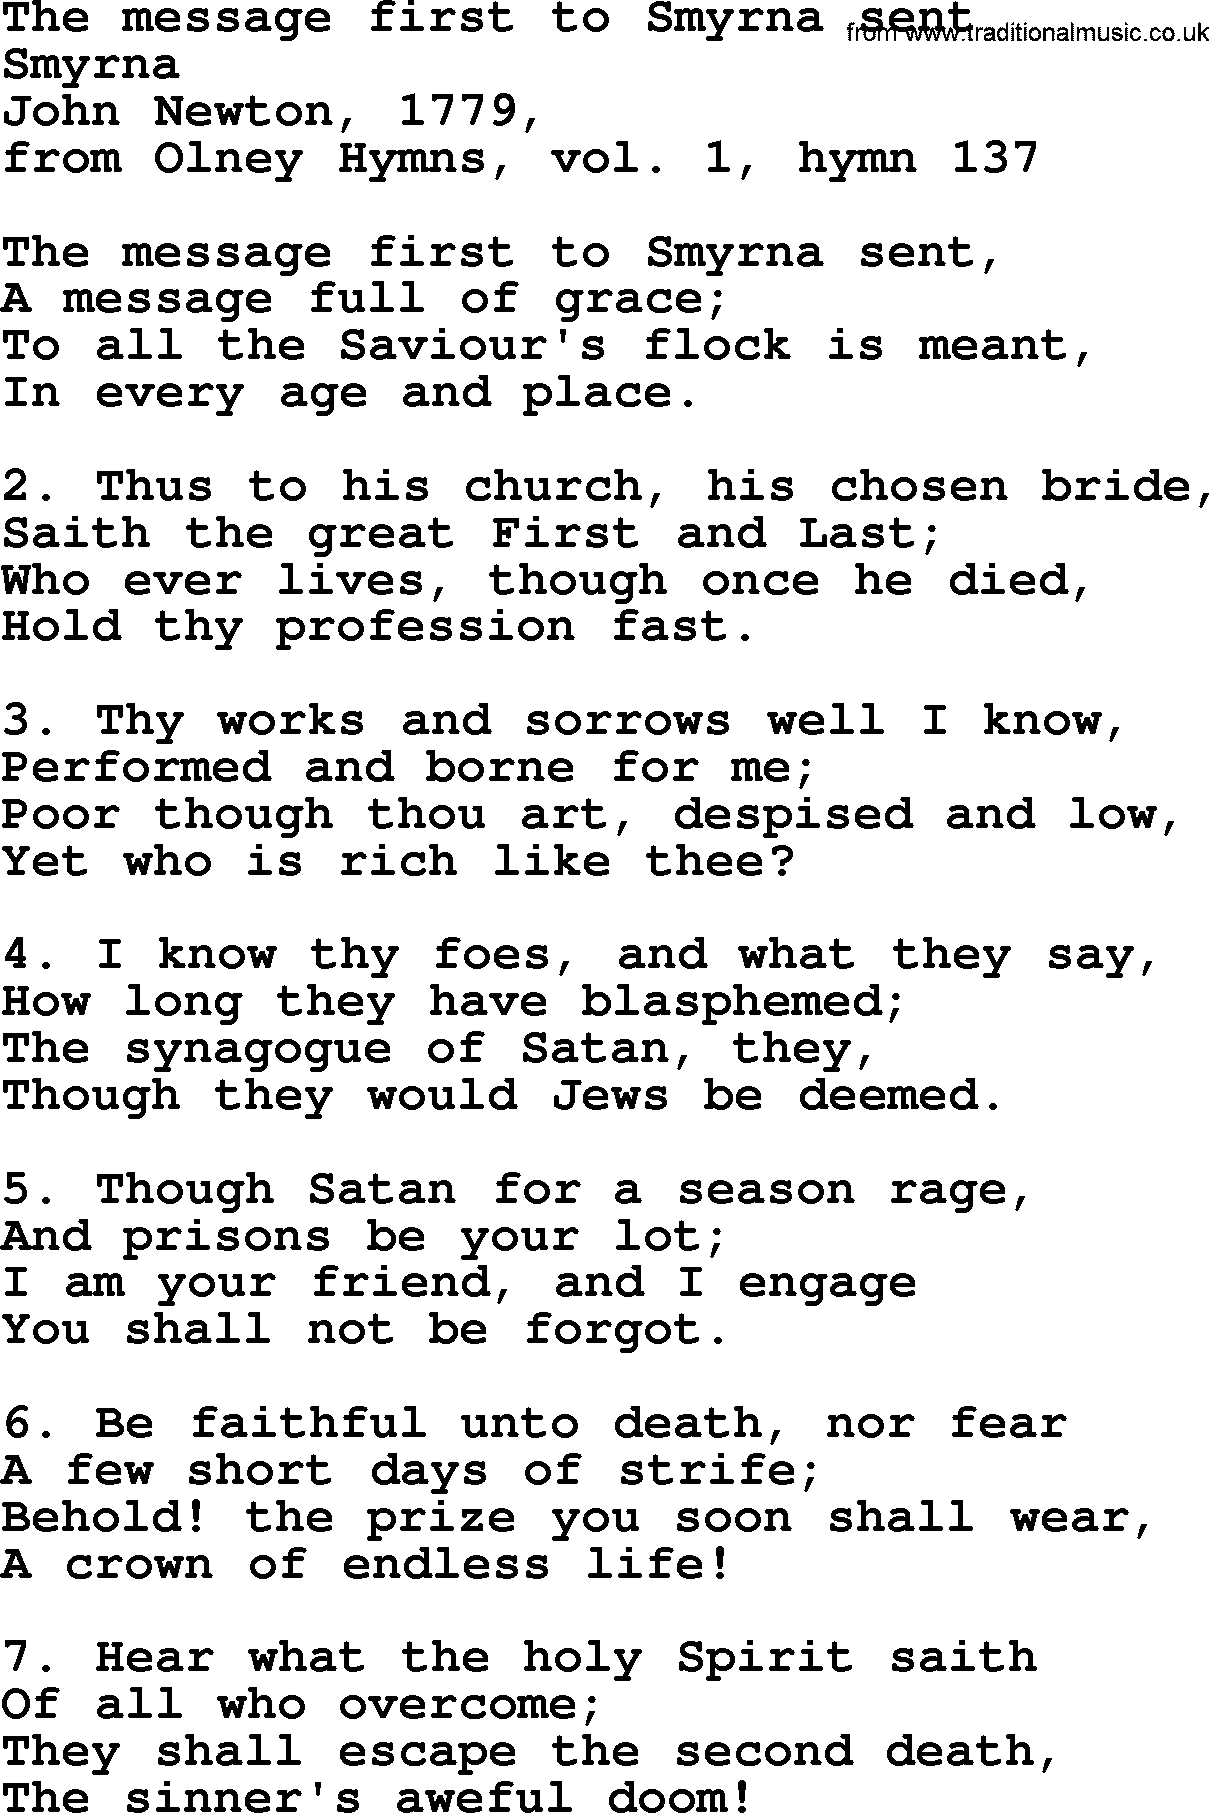 John Newton hymn: The Message First To Smyrna Sent, lyrics